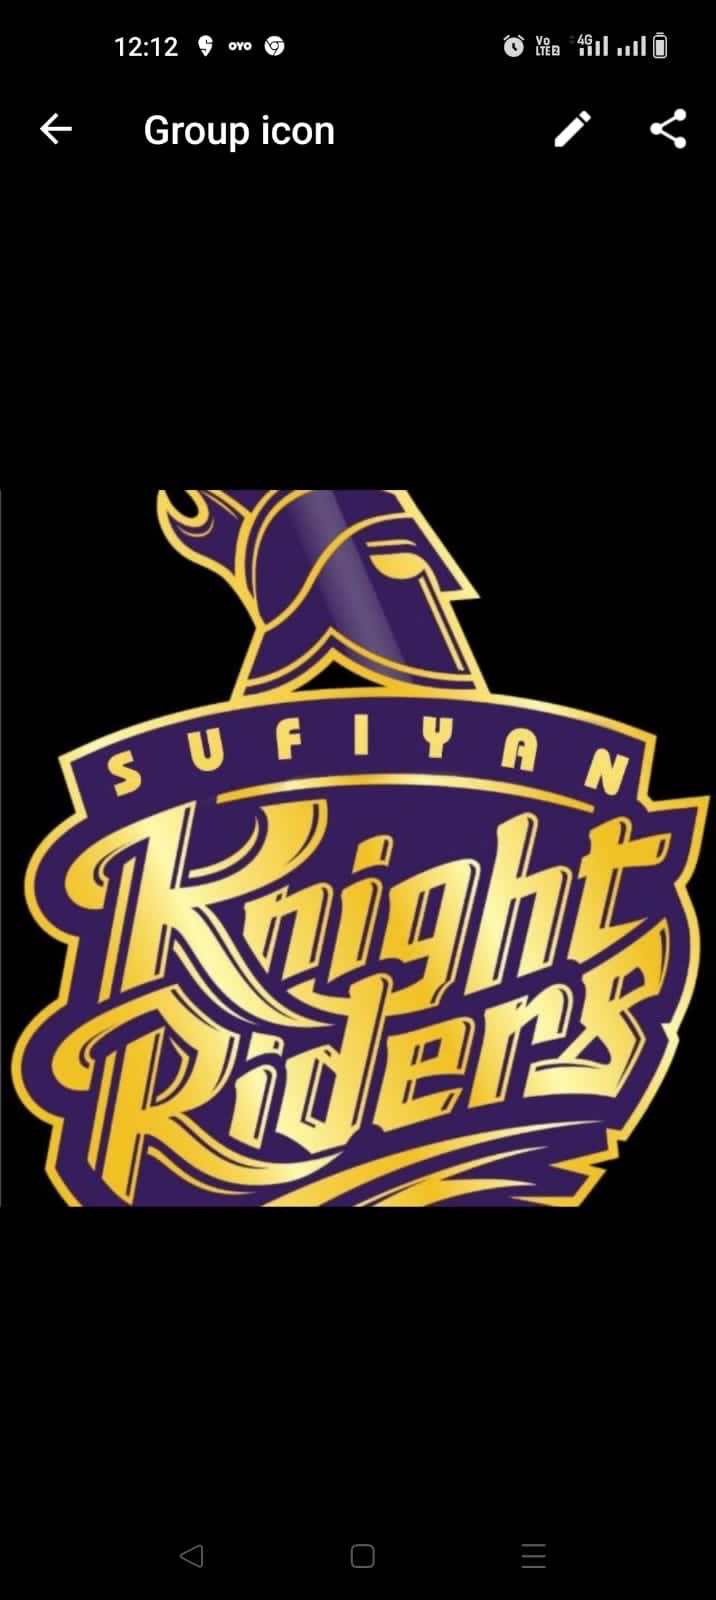 Sufiyan s Knight Riders